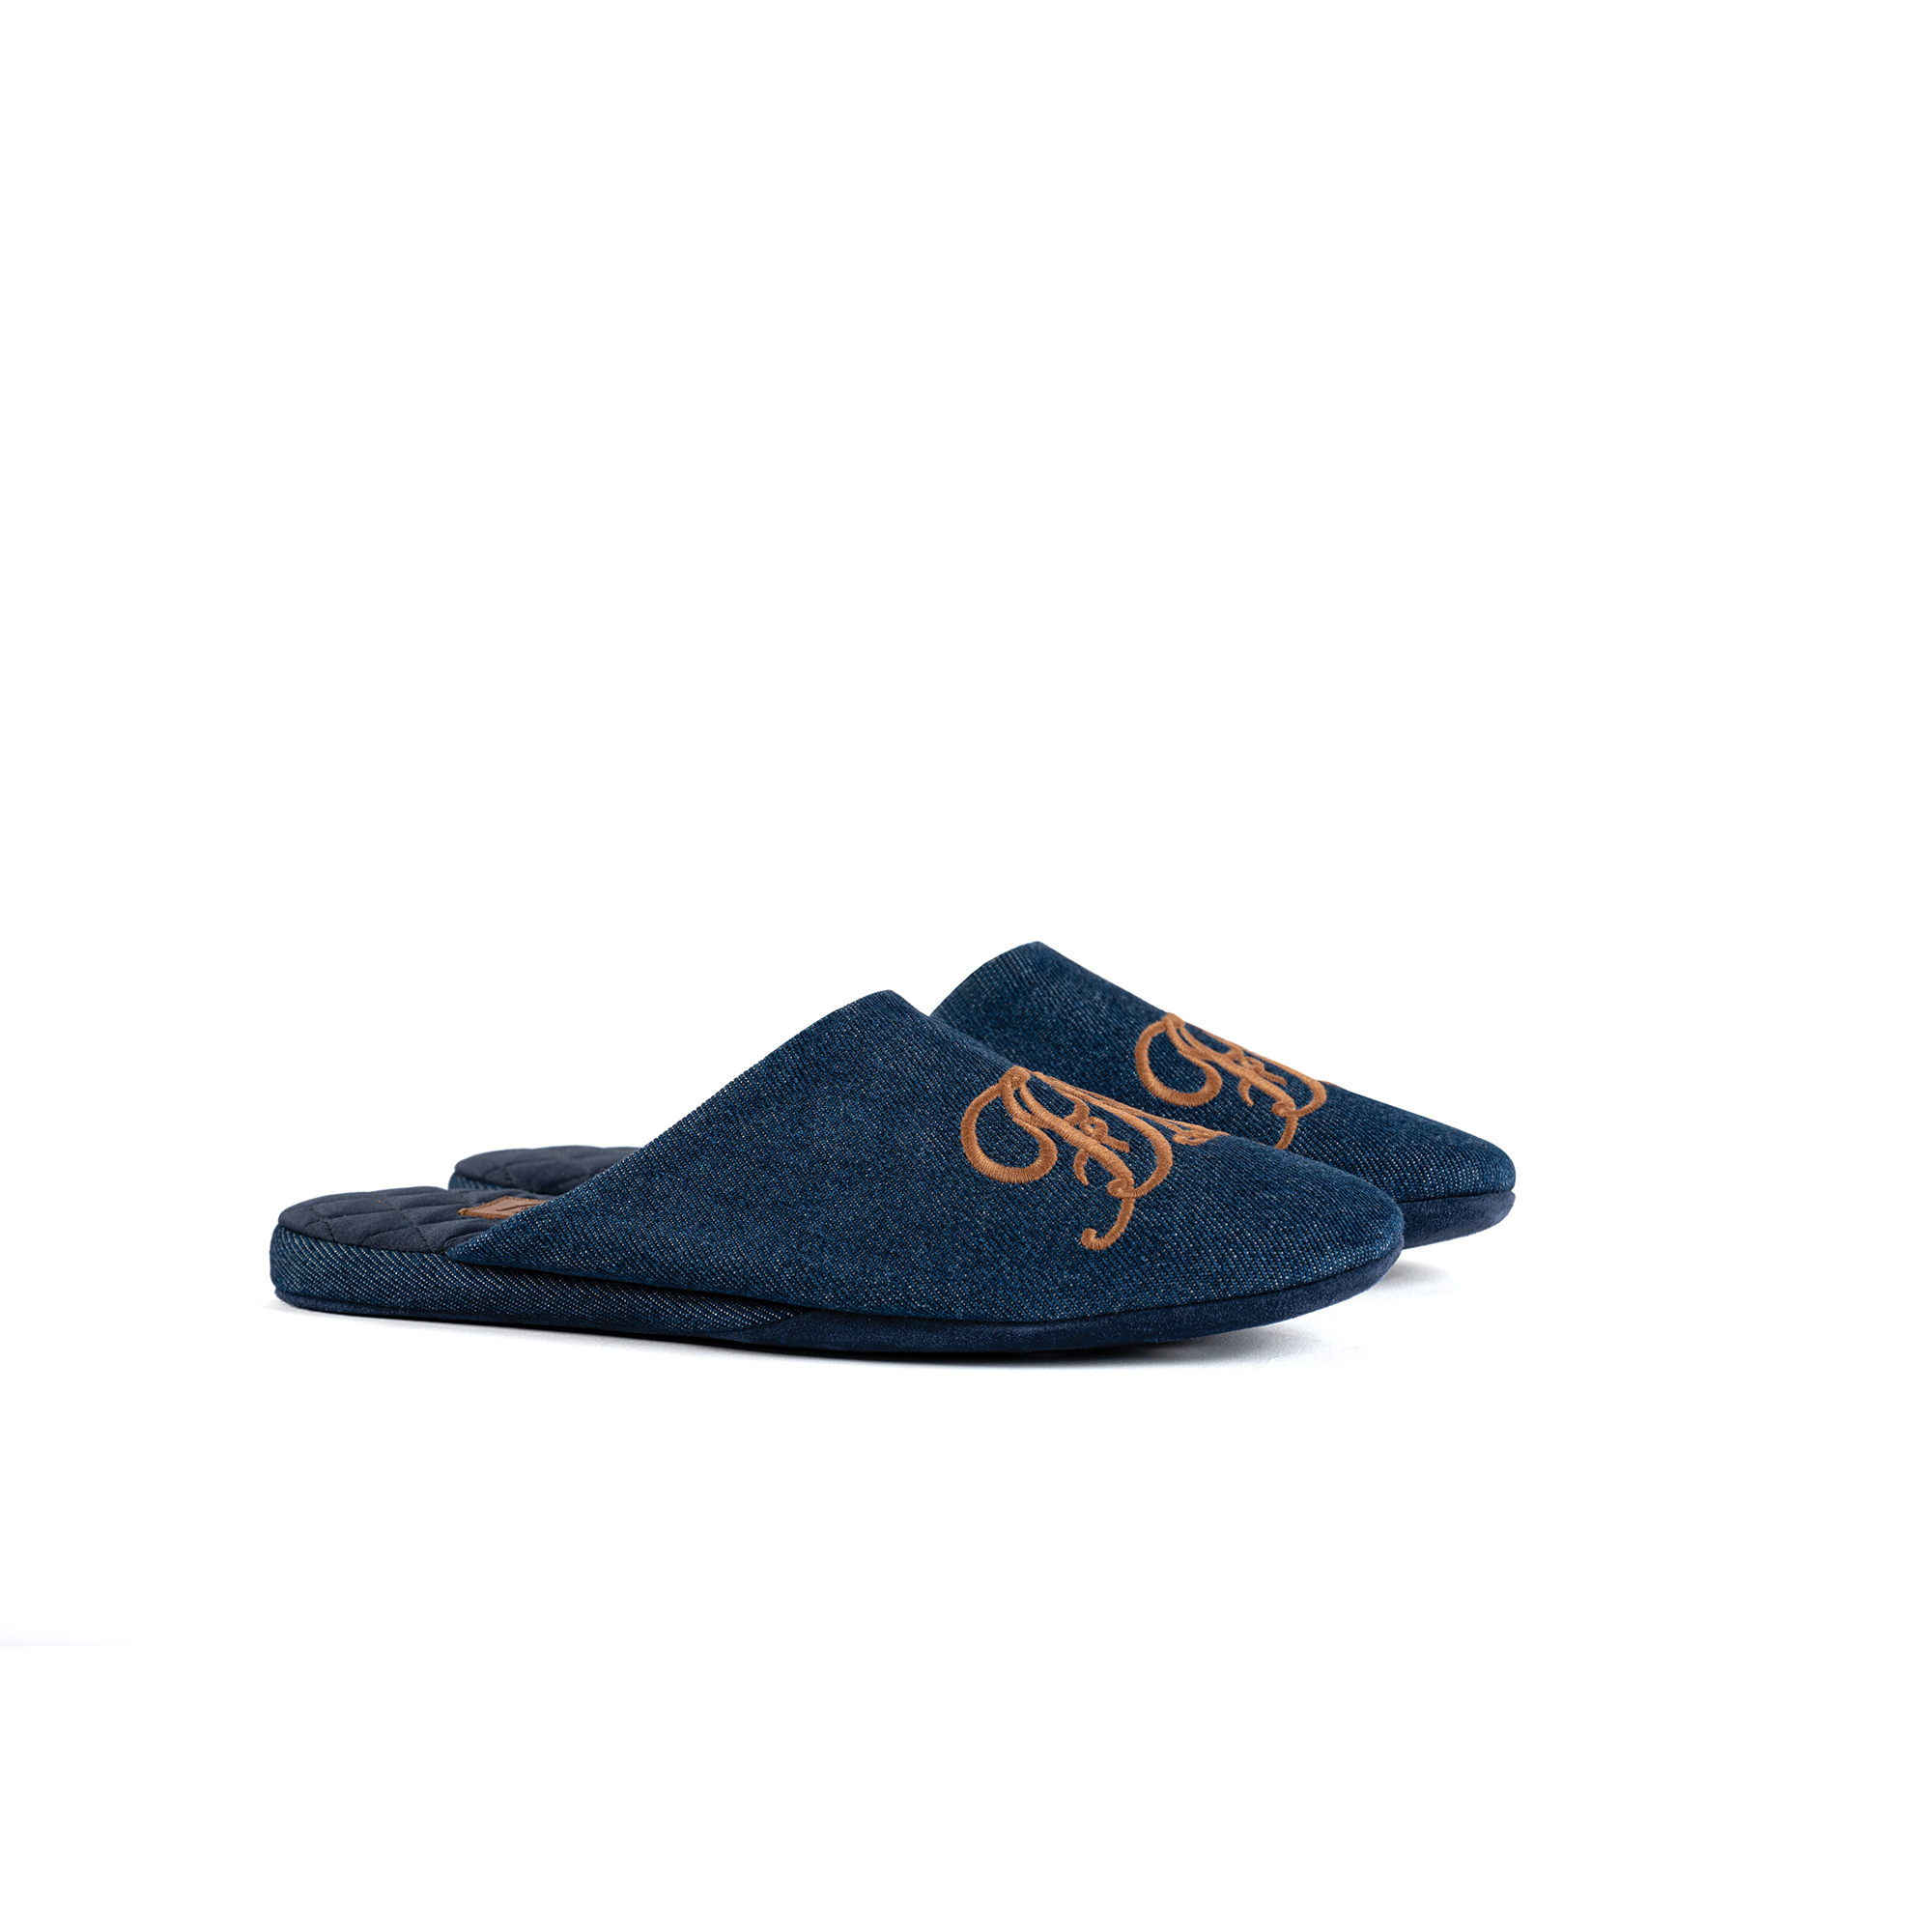 Pantofola interno classico in tessuto jeans - Farfalla italian slippers